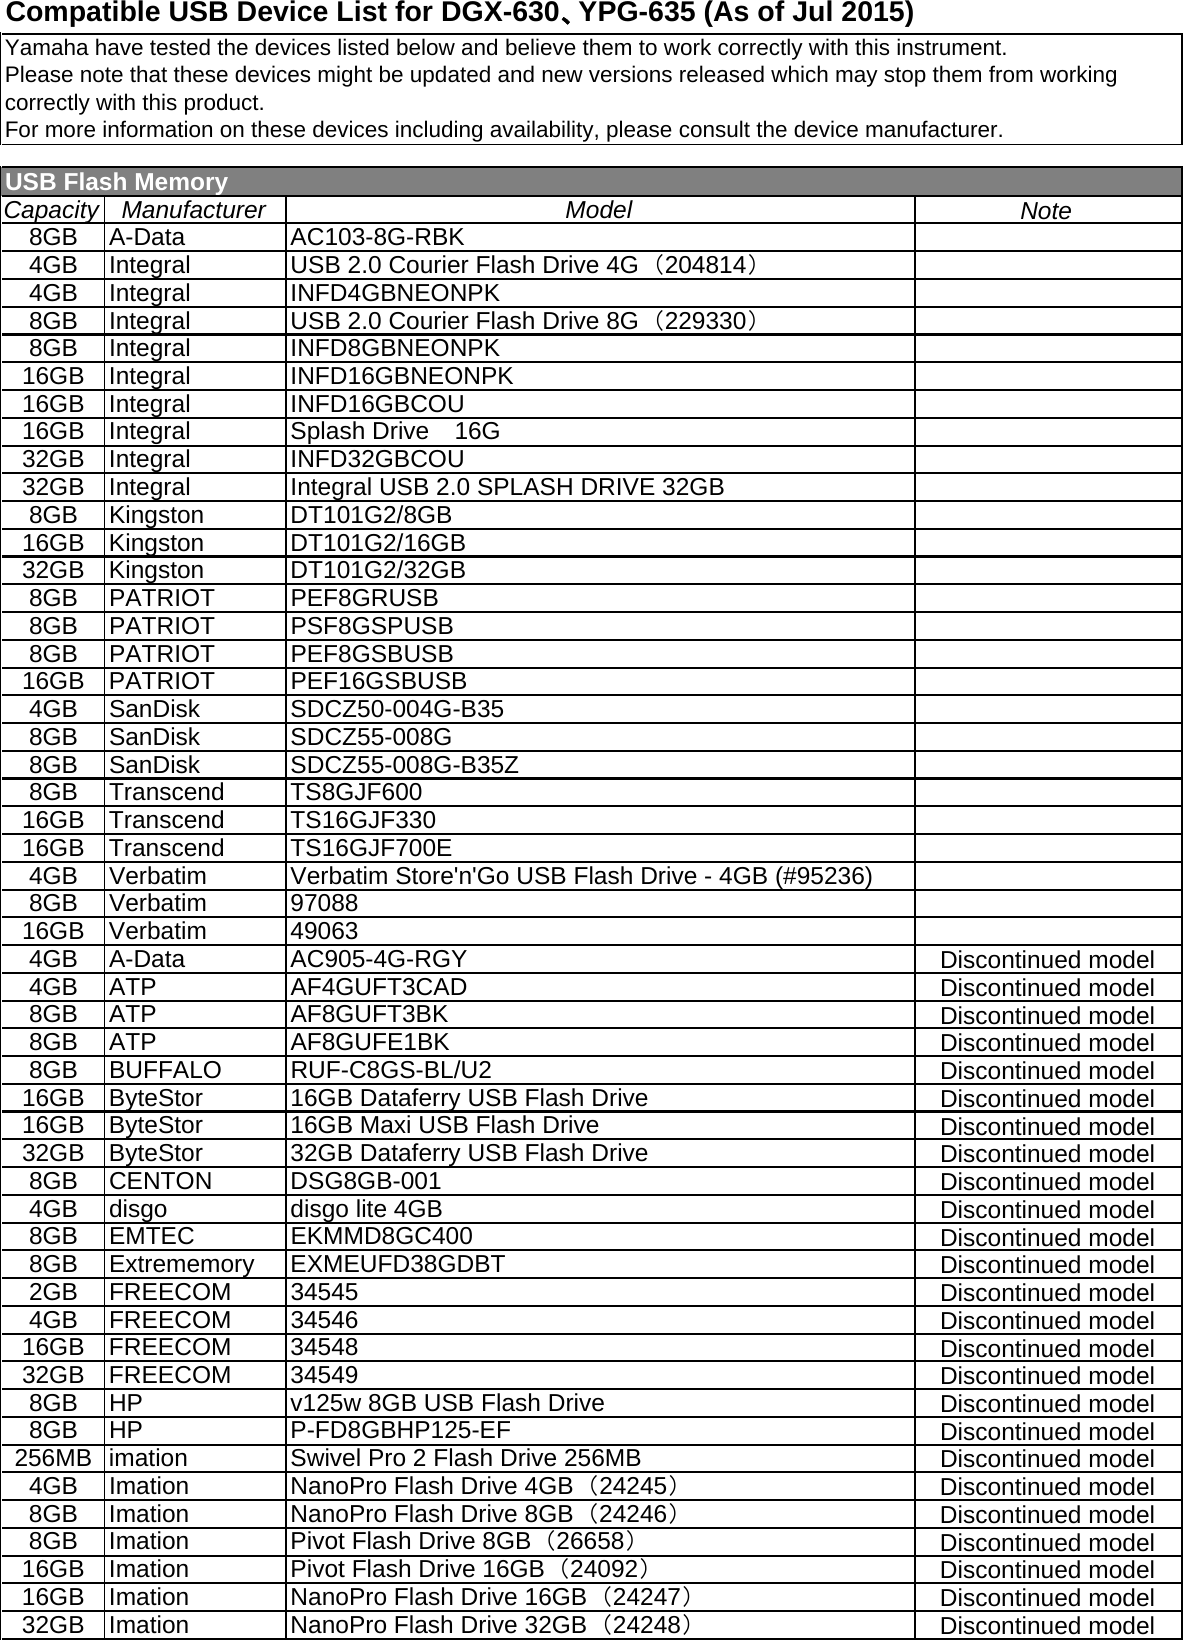 Page 1 of 3 - Yamaha DP_en_UsbDeviceList_201507_r2_byYamahax Compatible USB Device List For DGX-630, YPG-635 En-08DGX-H